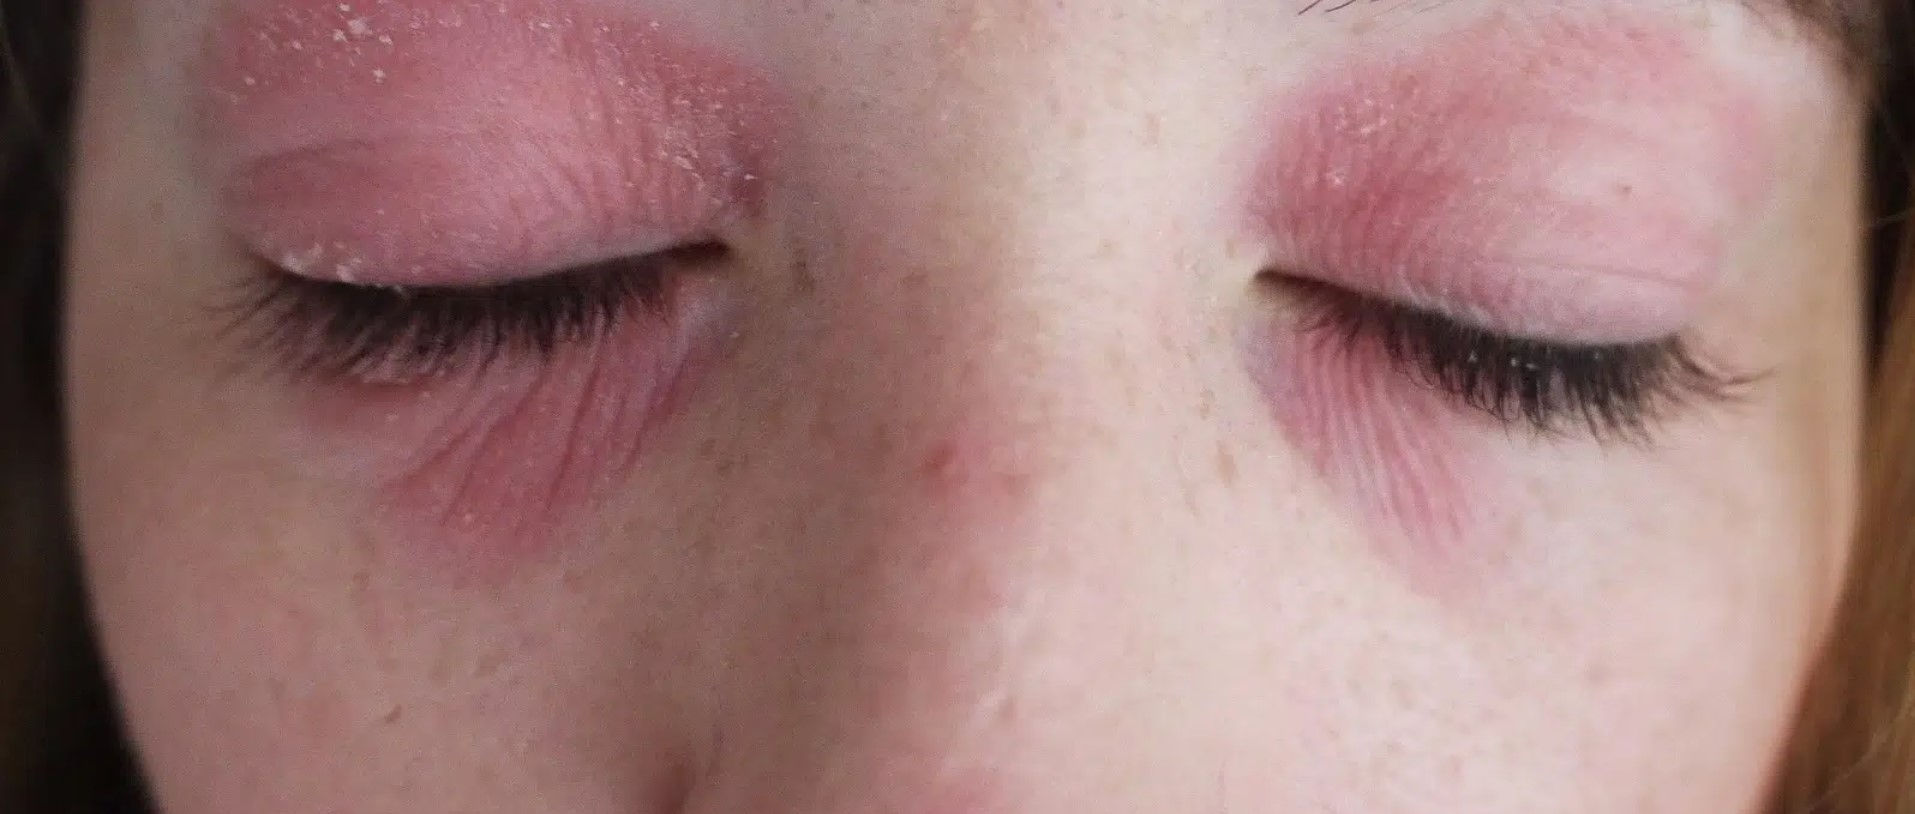 Eye Eczema Photo